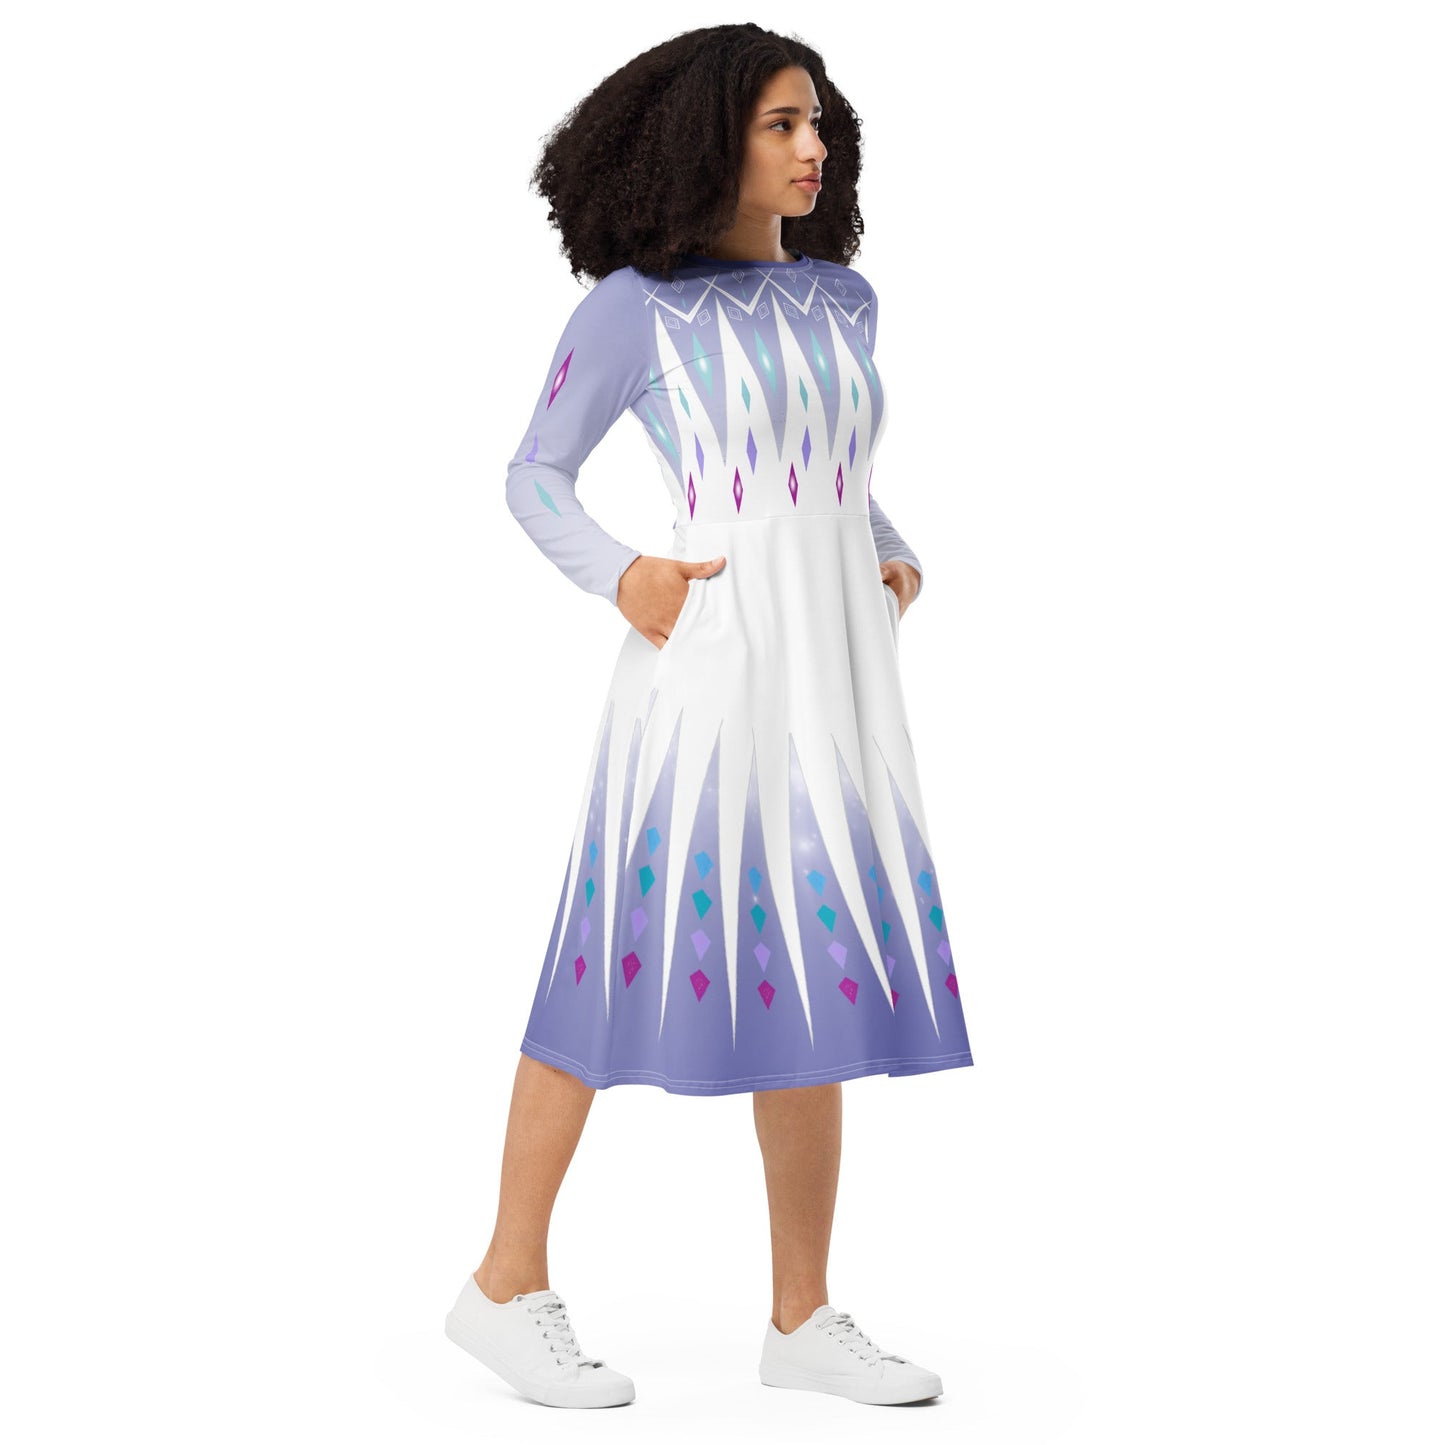 Elsa Frozen long sleeve midi dress adult elsa costumedisney dressdisney dress with pockets#tag4##tag5##tag6#